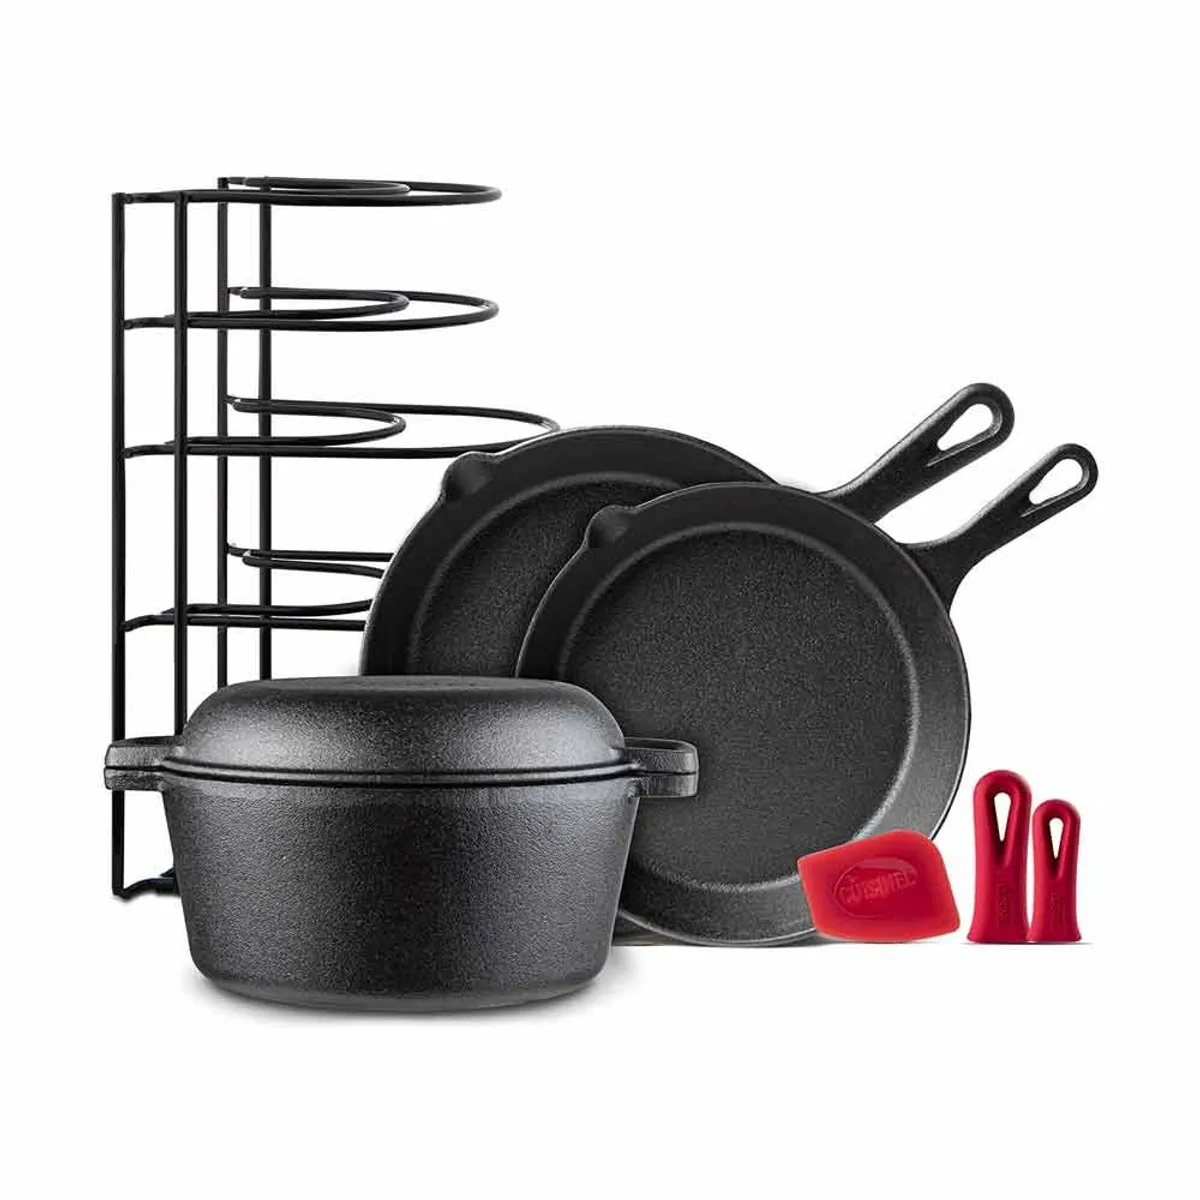 Cuisinel Cast Iron Cookware 5-Pc Set